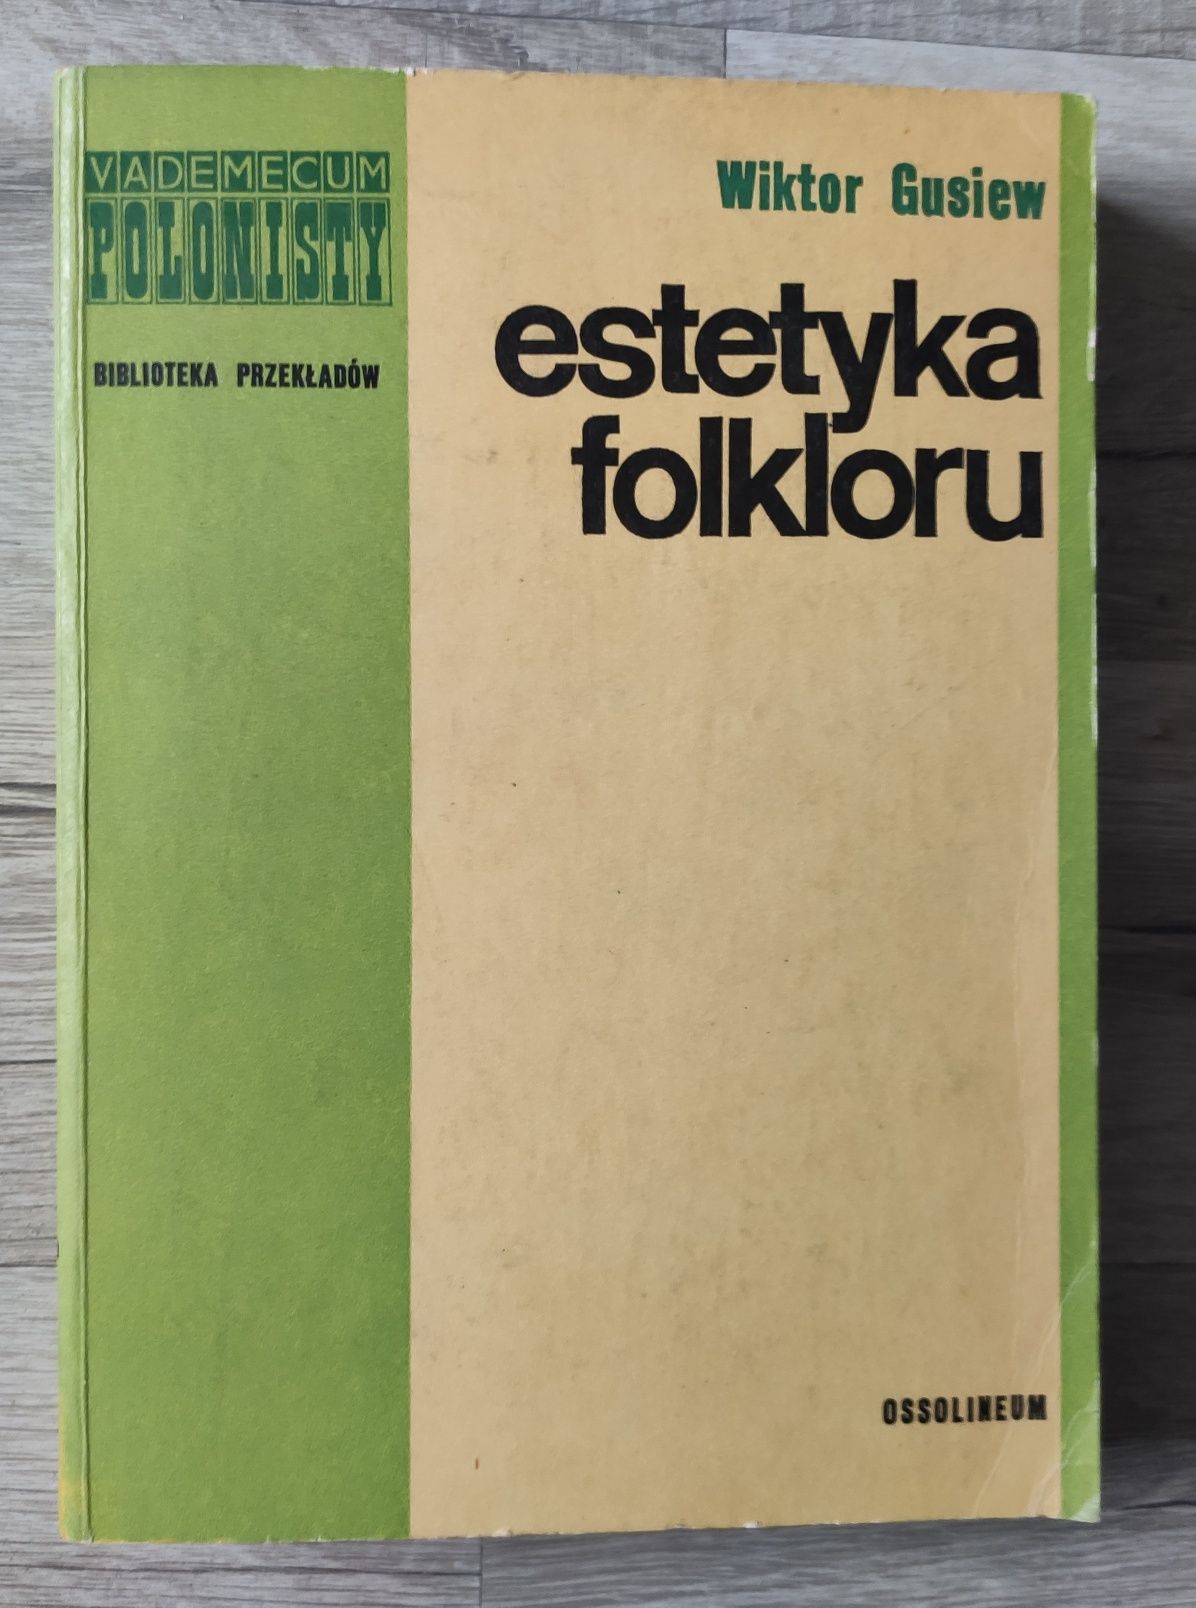 Estetyka folkloru Wiktor Gusiew vademecum polonisty